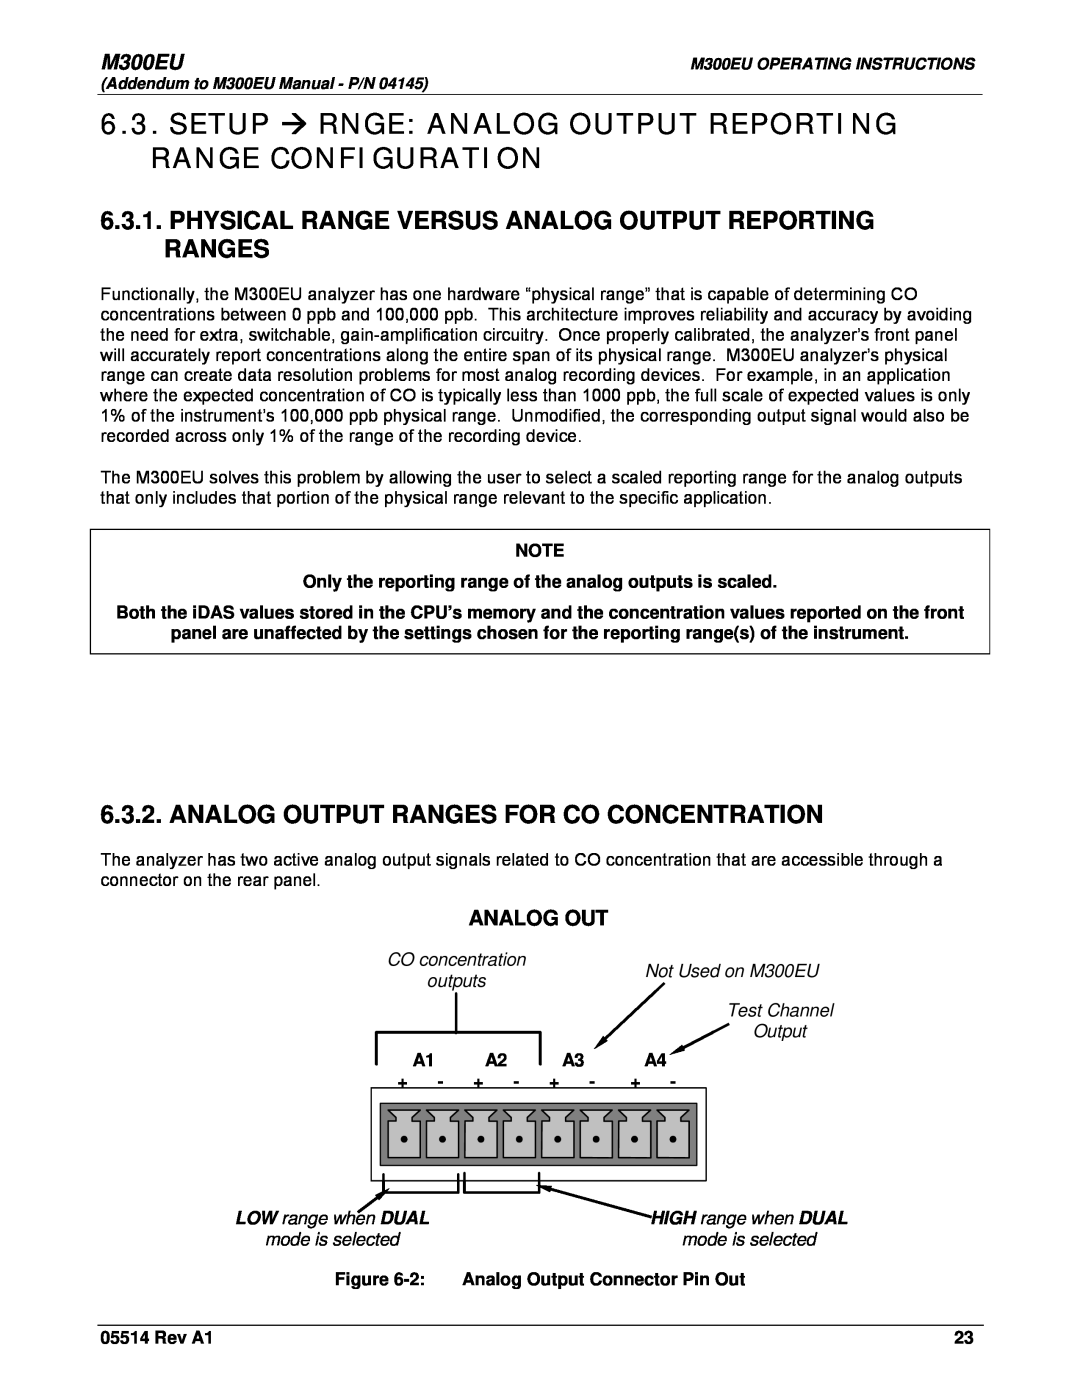 Teledyne Model 300EU Setup Æ Rnge Analog Output Reporting Range Configuration, Analog Output Ranges For Co Concentration 